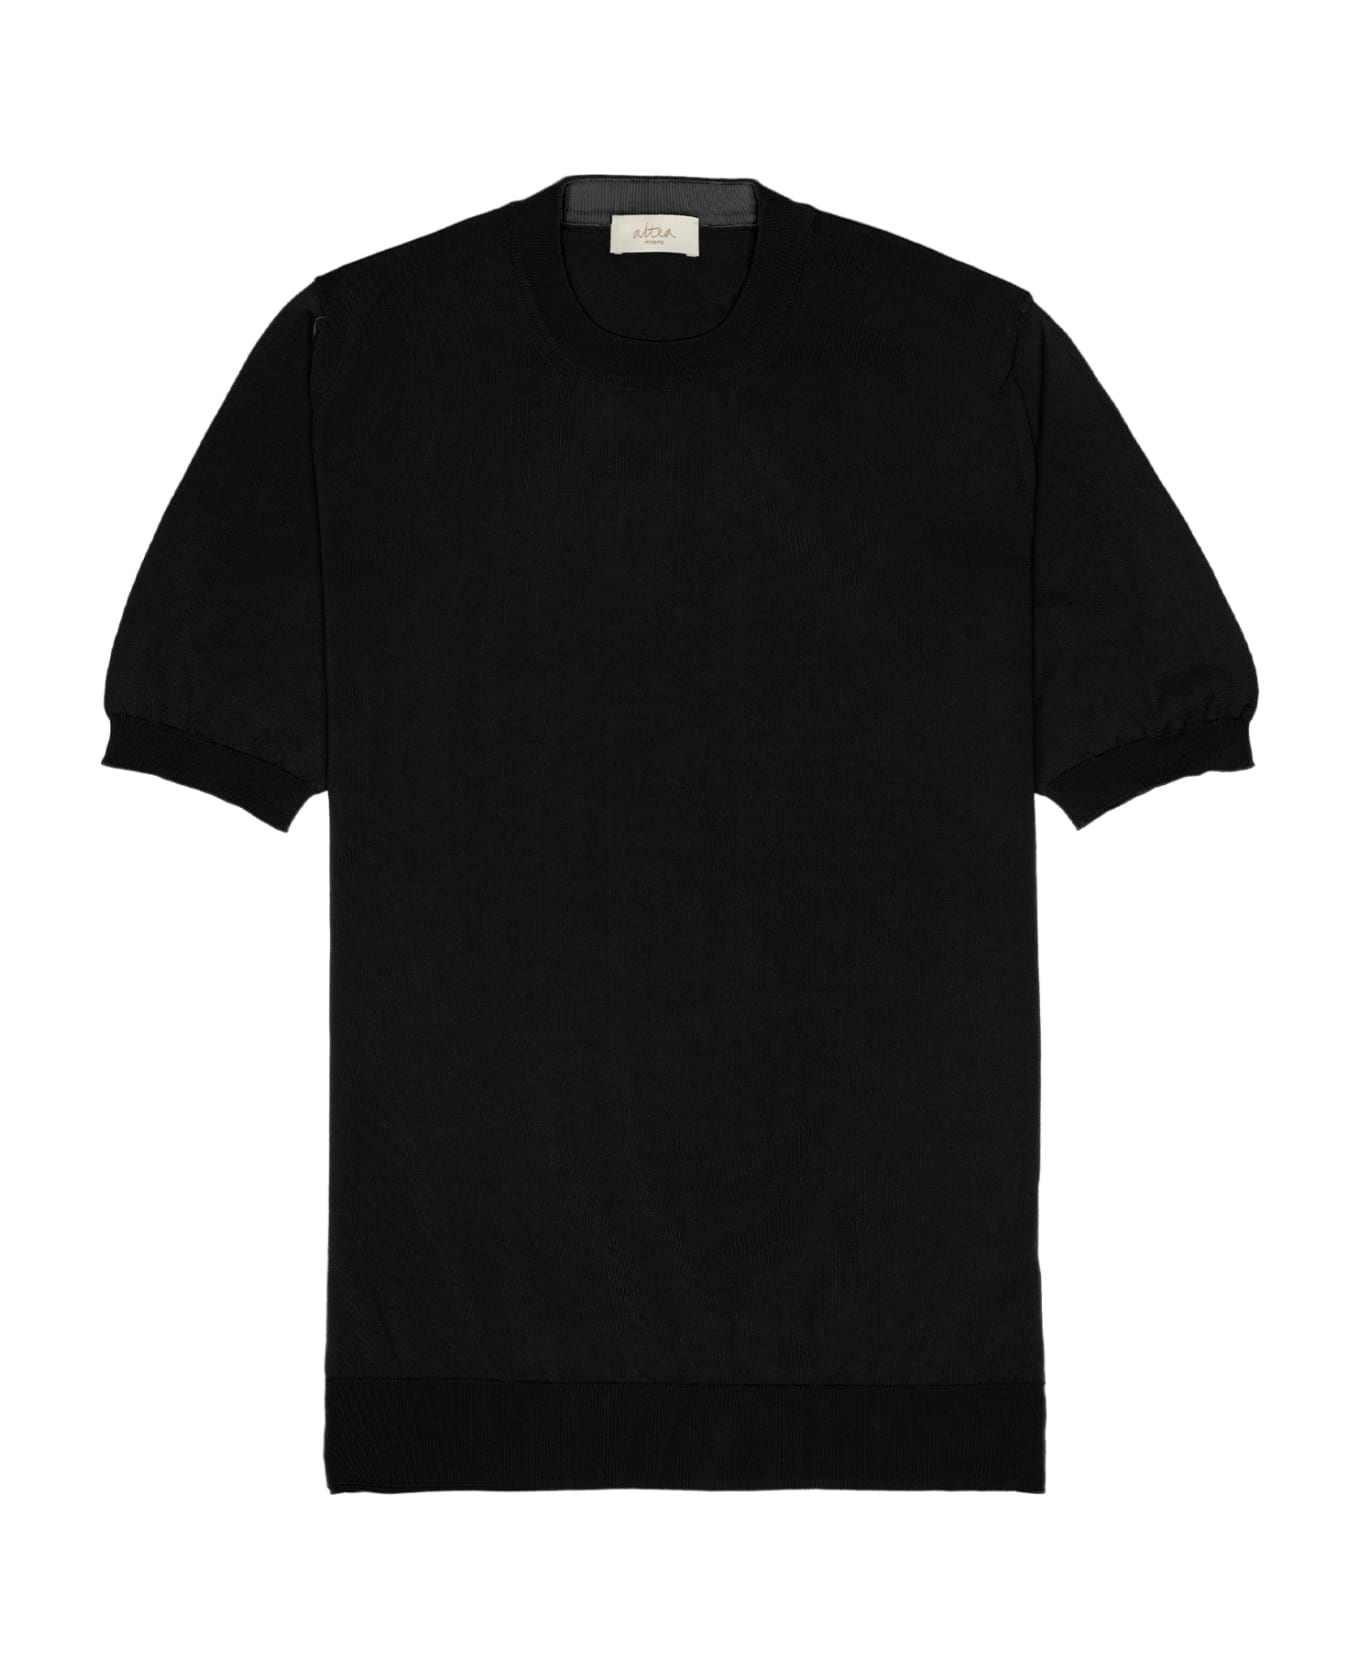 Altea Black Cotton T-shirt - NERO